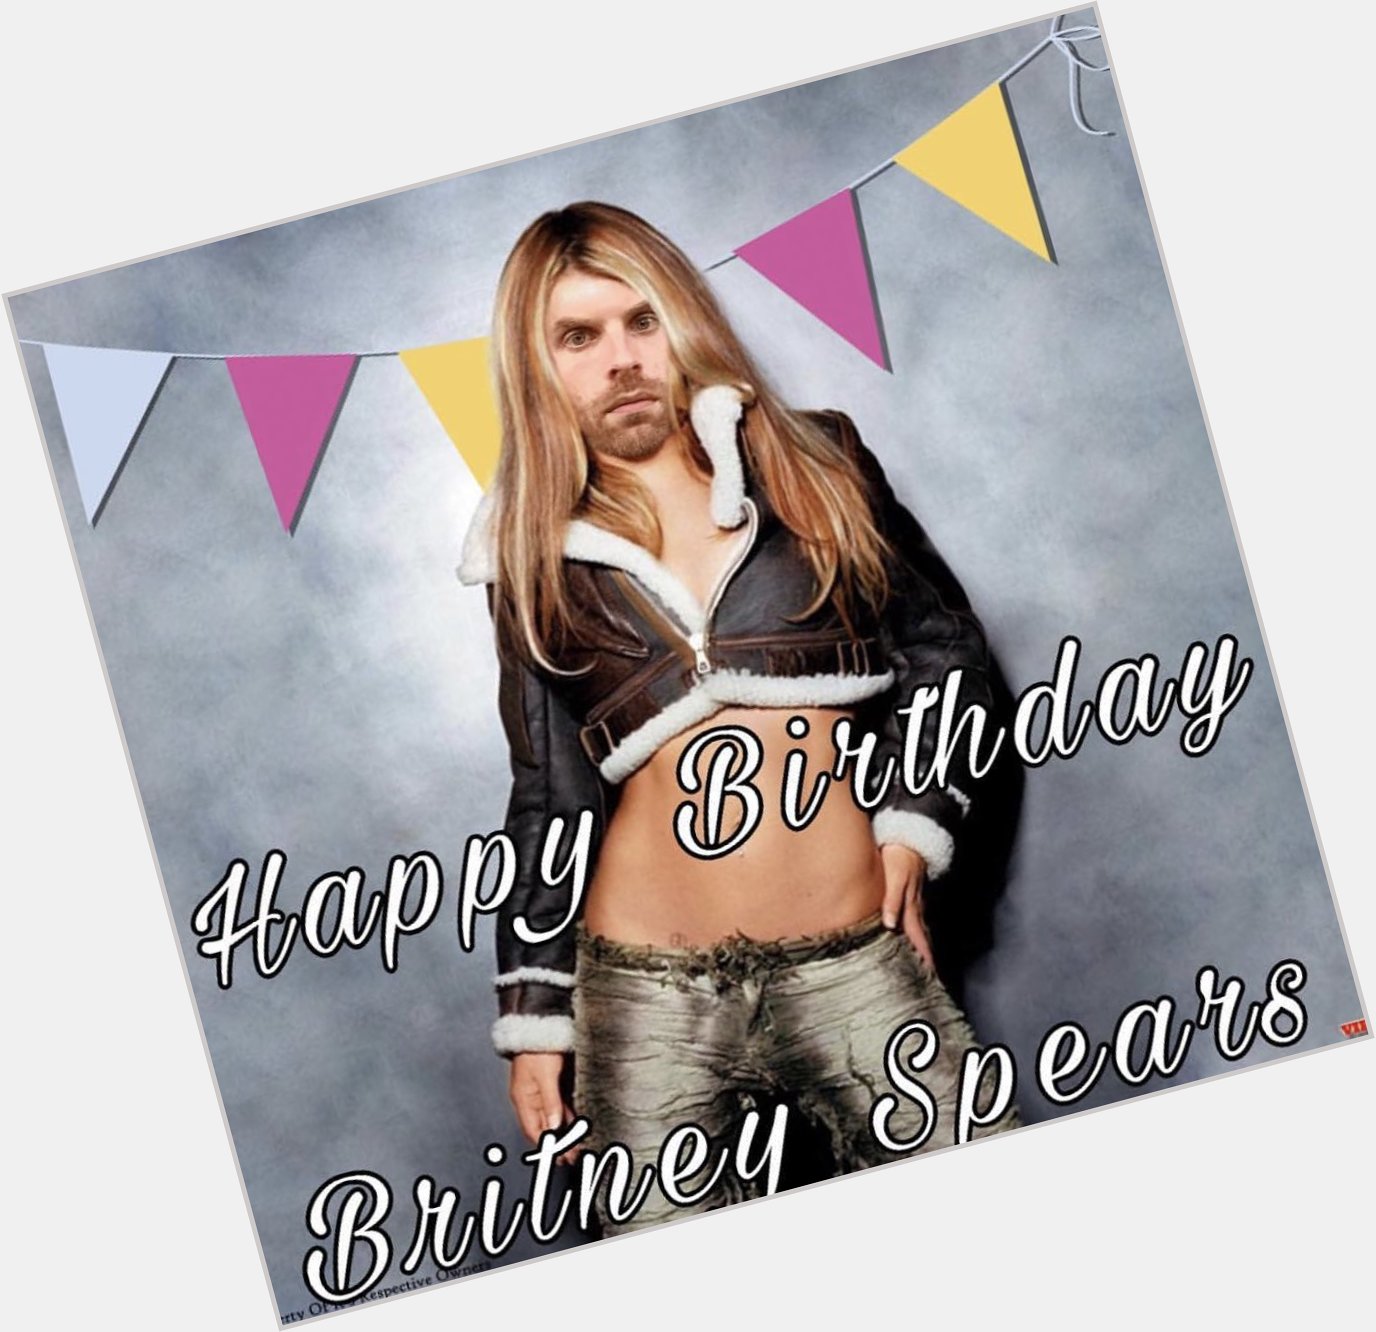 + Happy birthday Britney Spears
12/02/18 : katya_zamo 